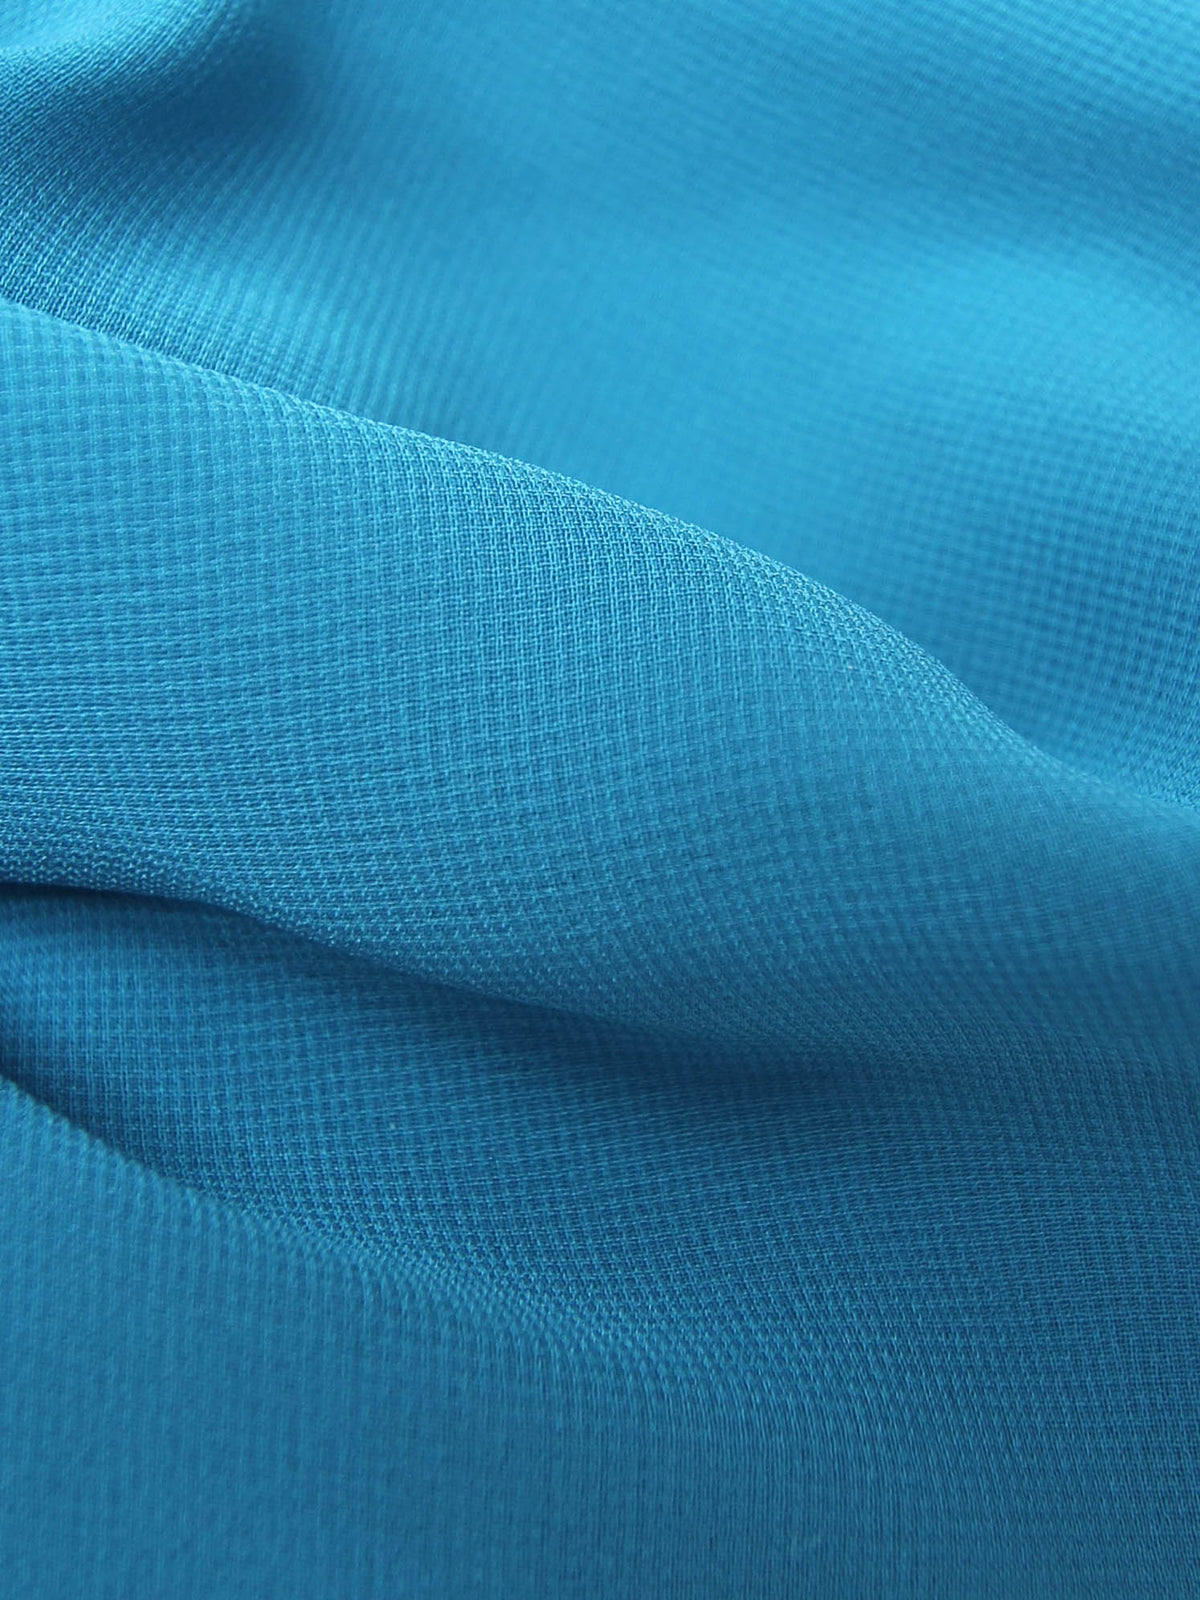 Blaugrüner Polyester-Chiffon-Stoff – Serendipity